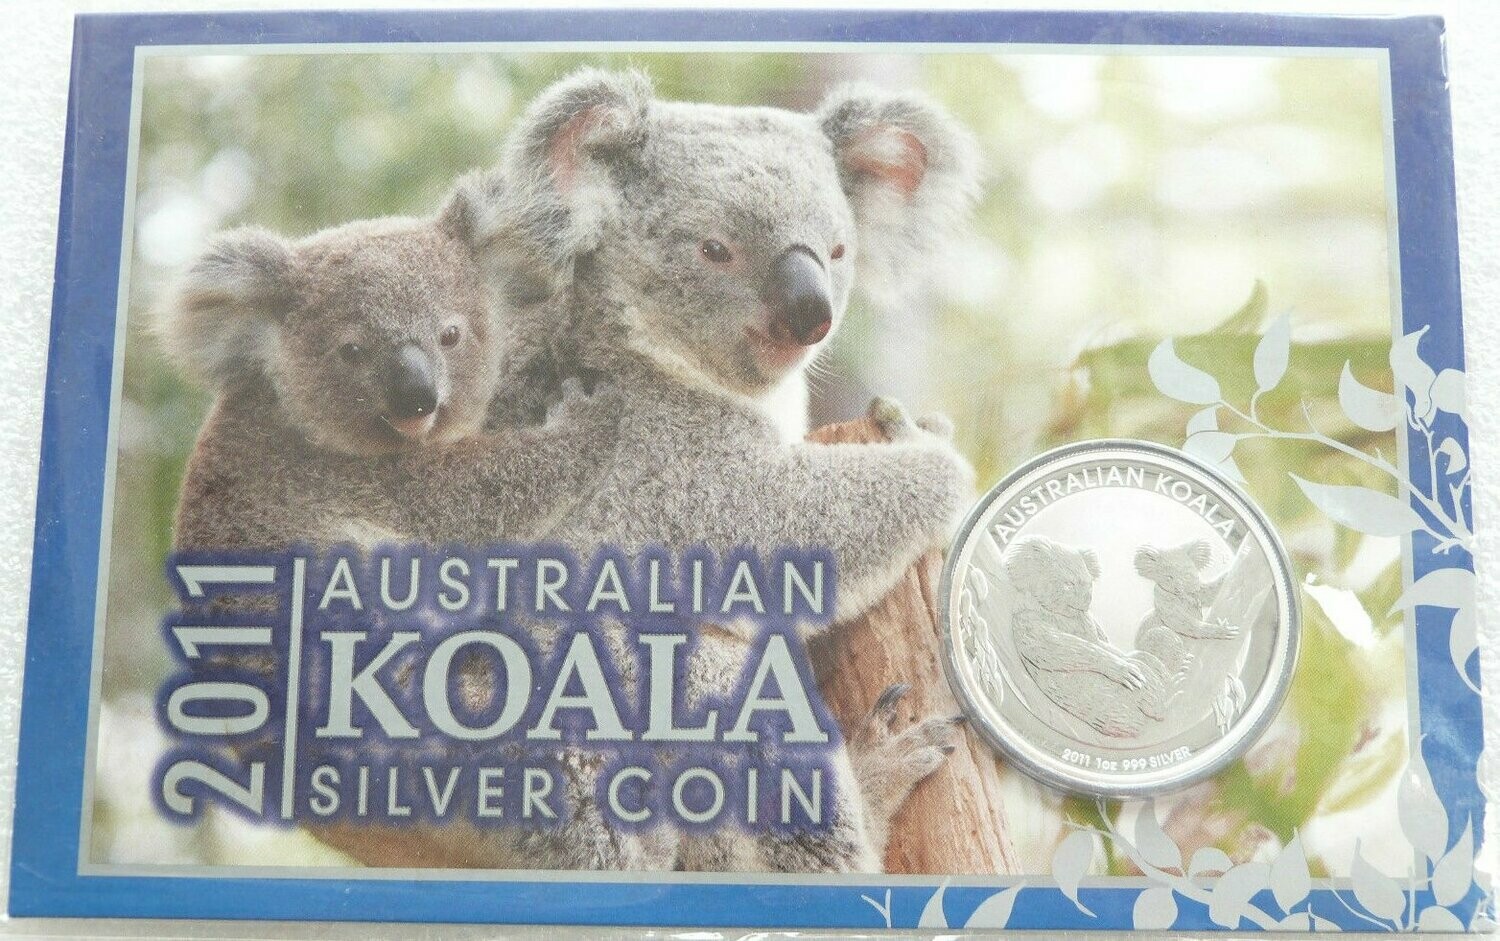 2011 Australia Koala $1 Silver 1oz Coin Mint Pack